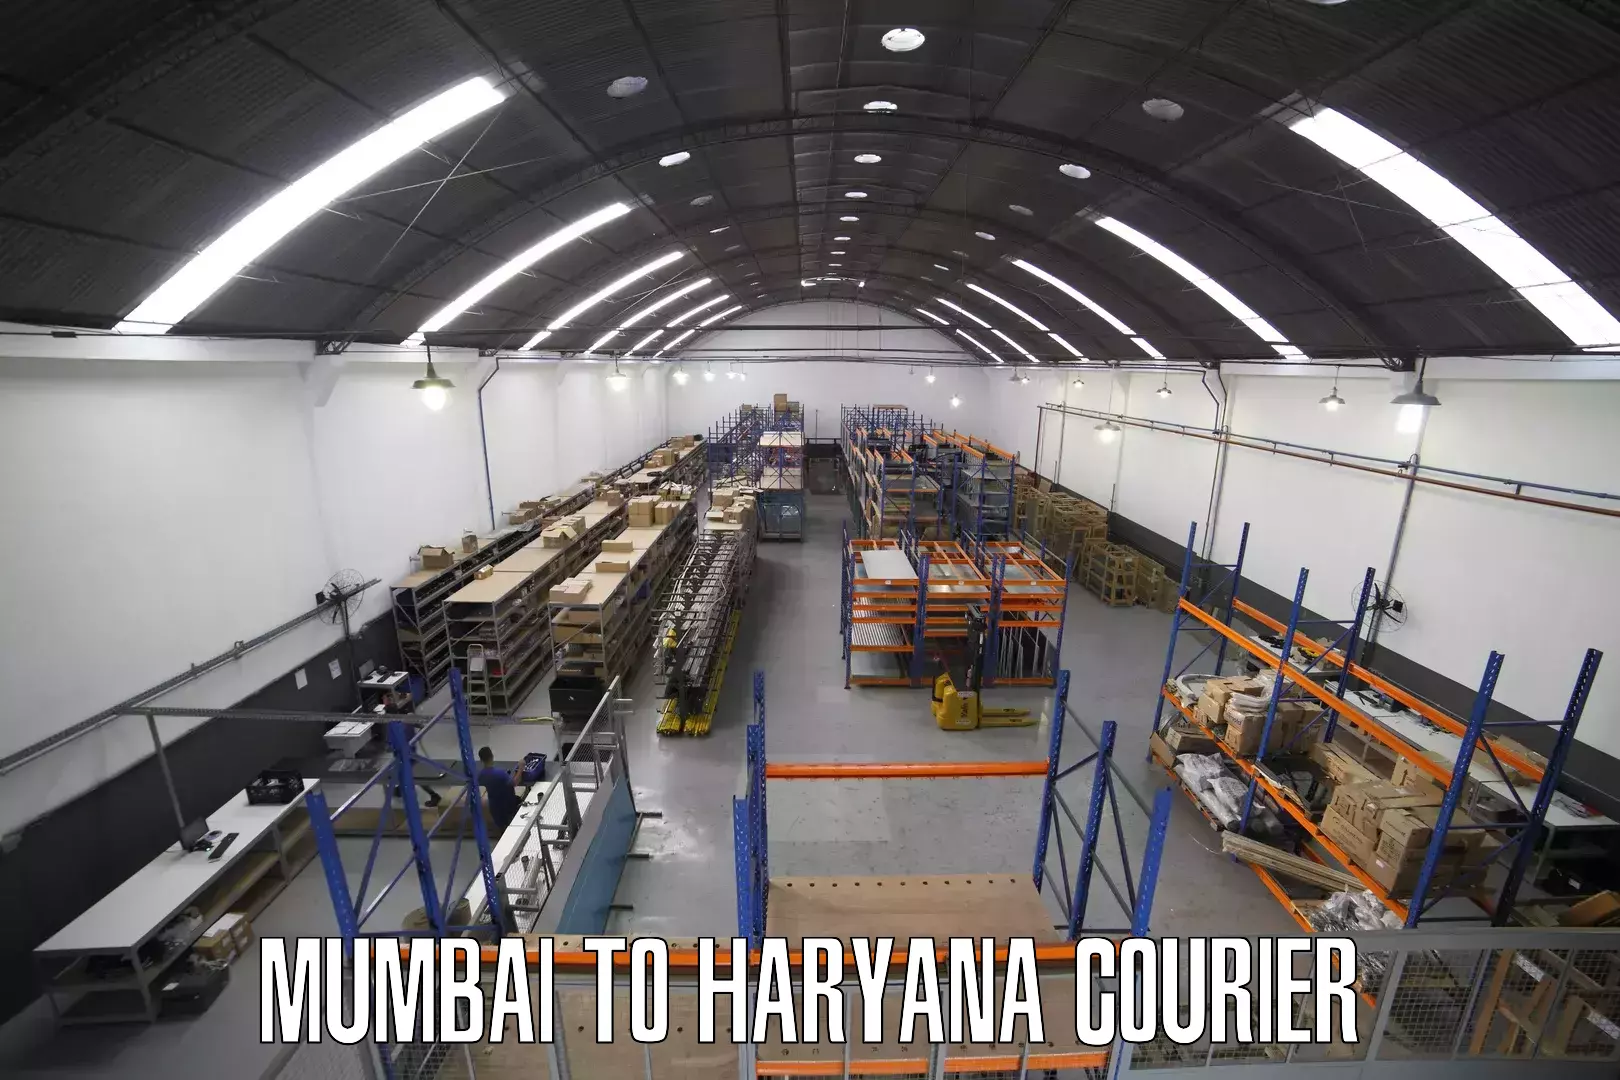 Courier tracking online Mumbai to Bhiwani